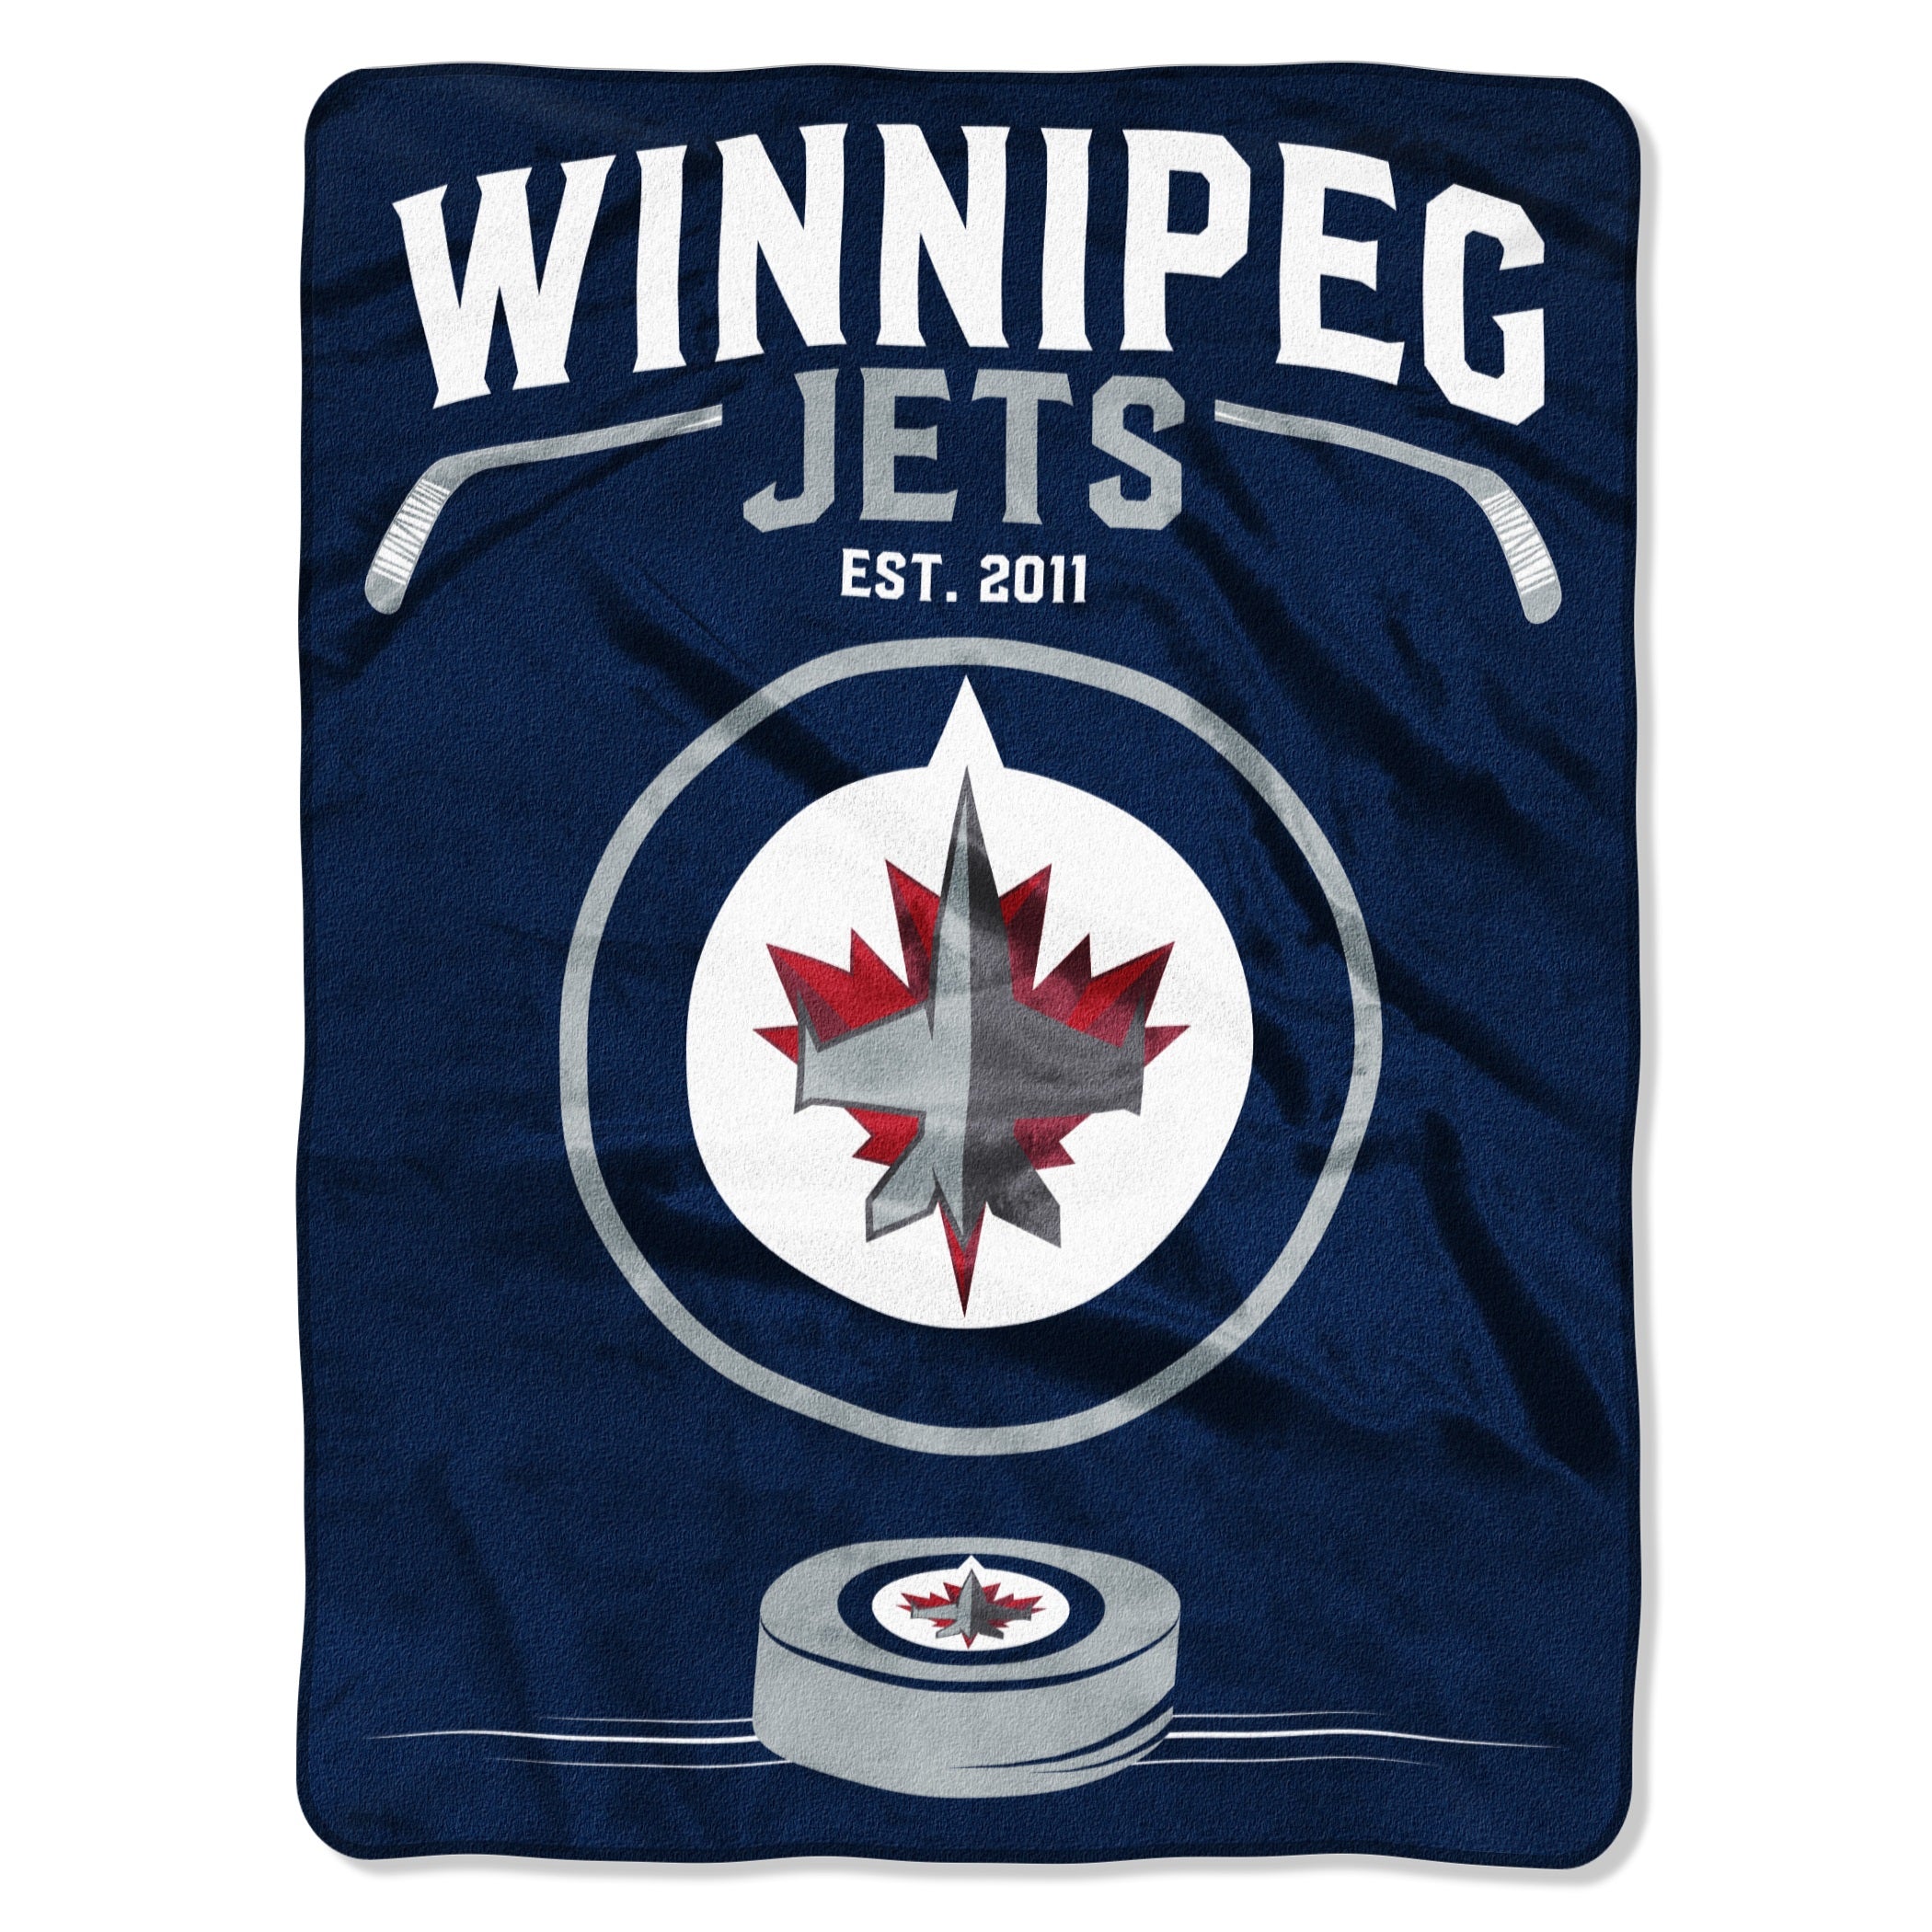 Winnipeg Jets Blanket 60x80 Raschel Inspired Design - Special Order